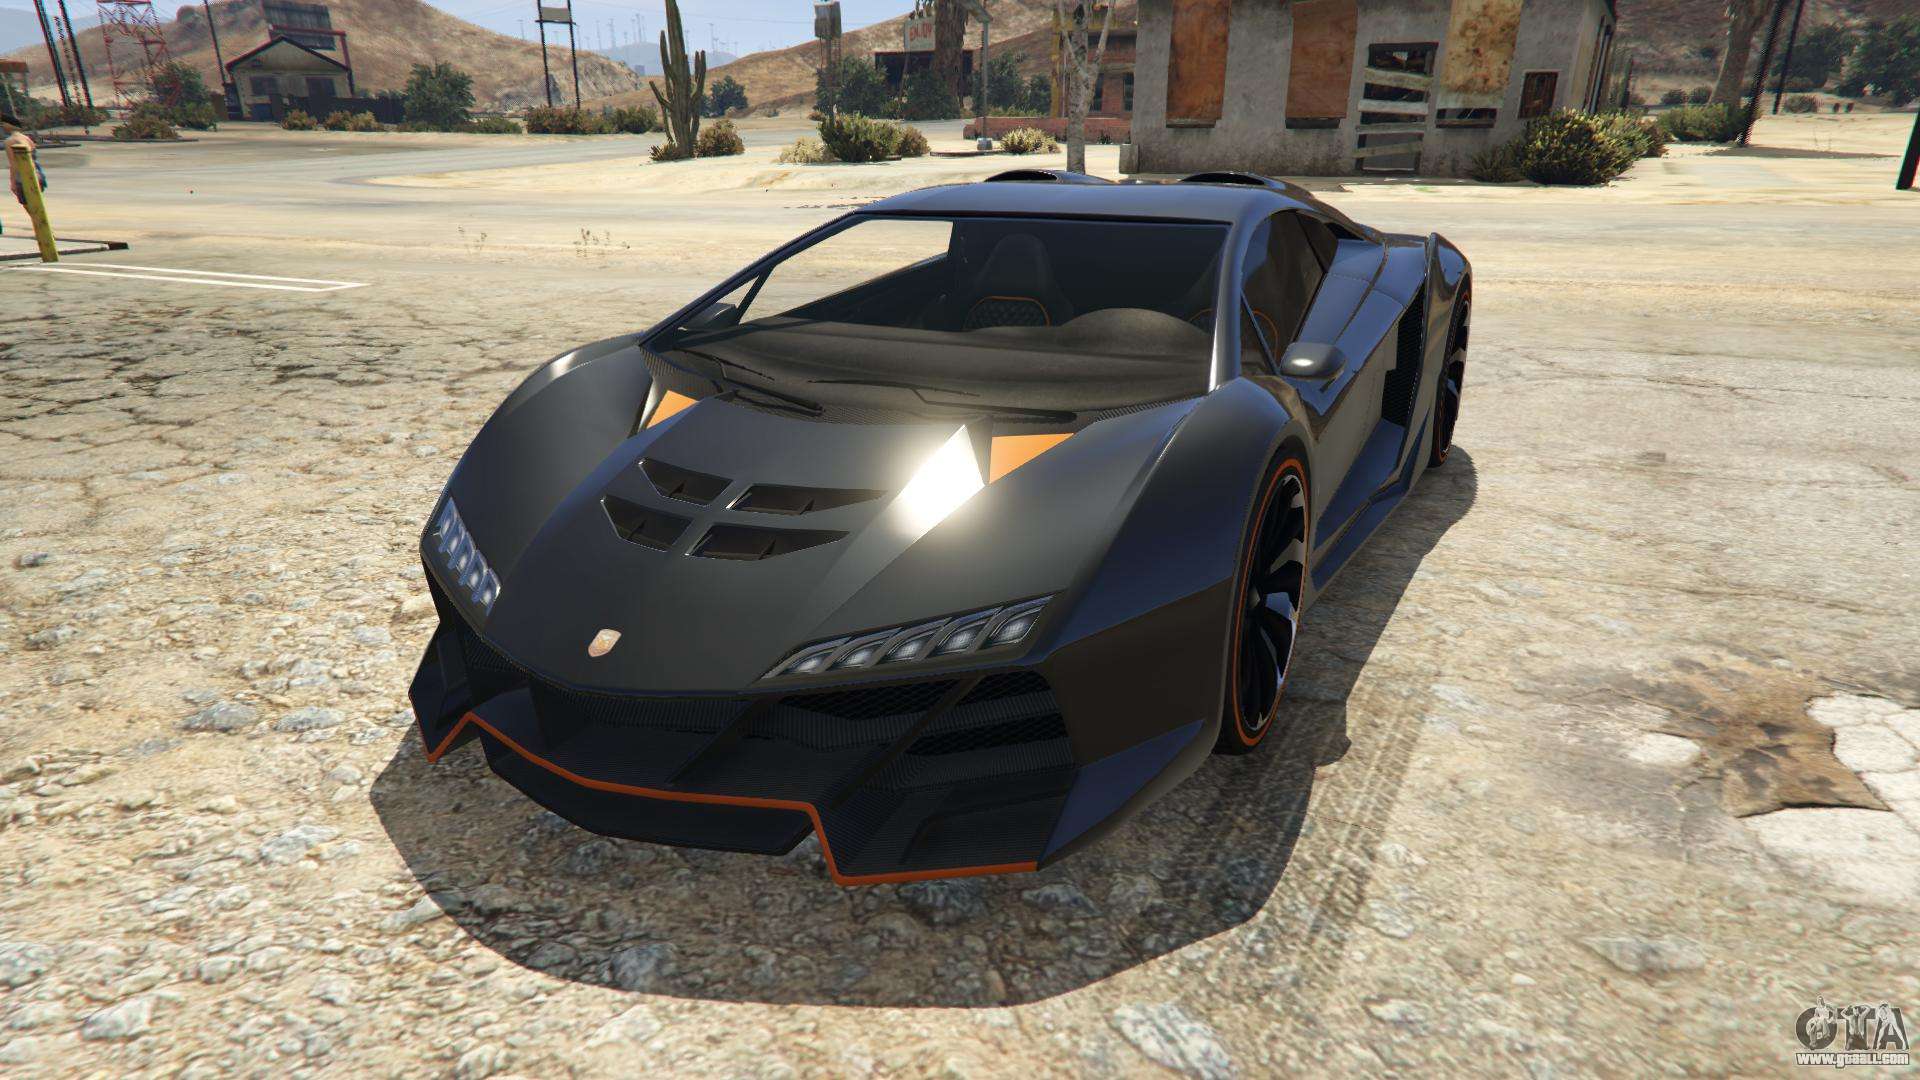 Pegassi Zentorno from GTA 5 - screenshots, features and description  supercar.